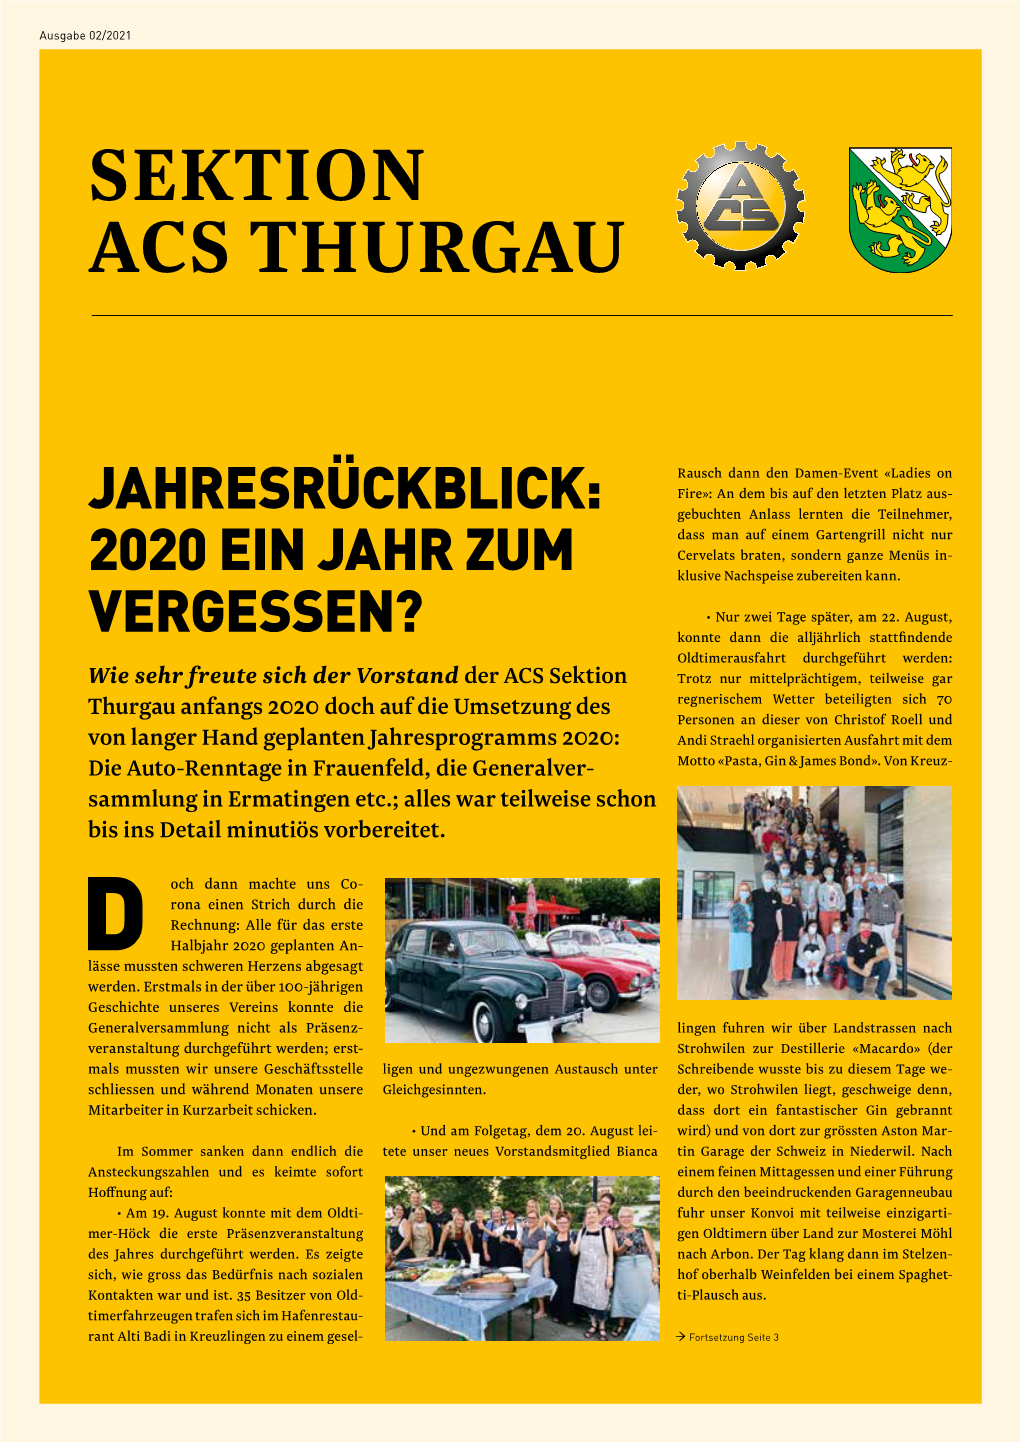 Sektion Acs Thurgau